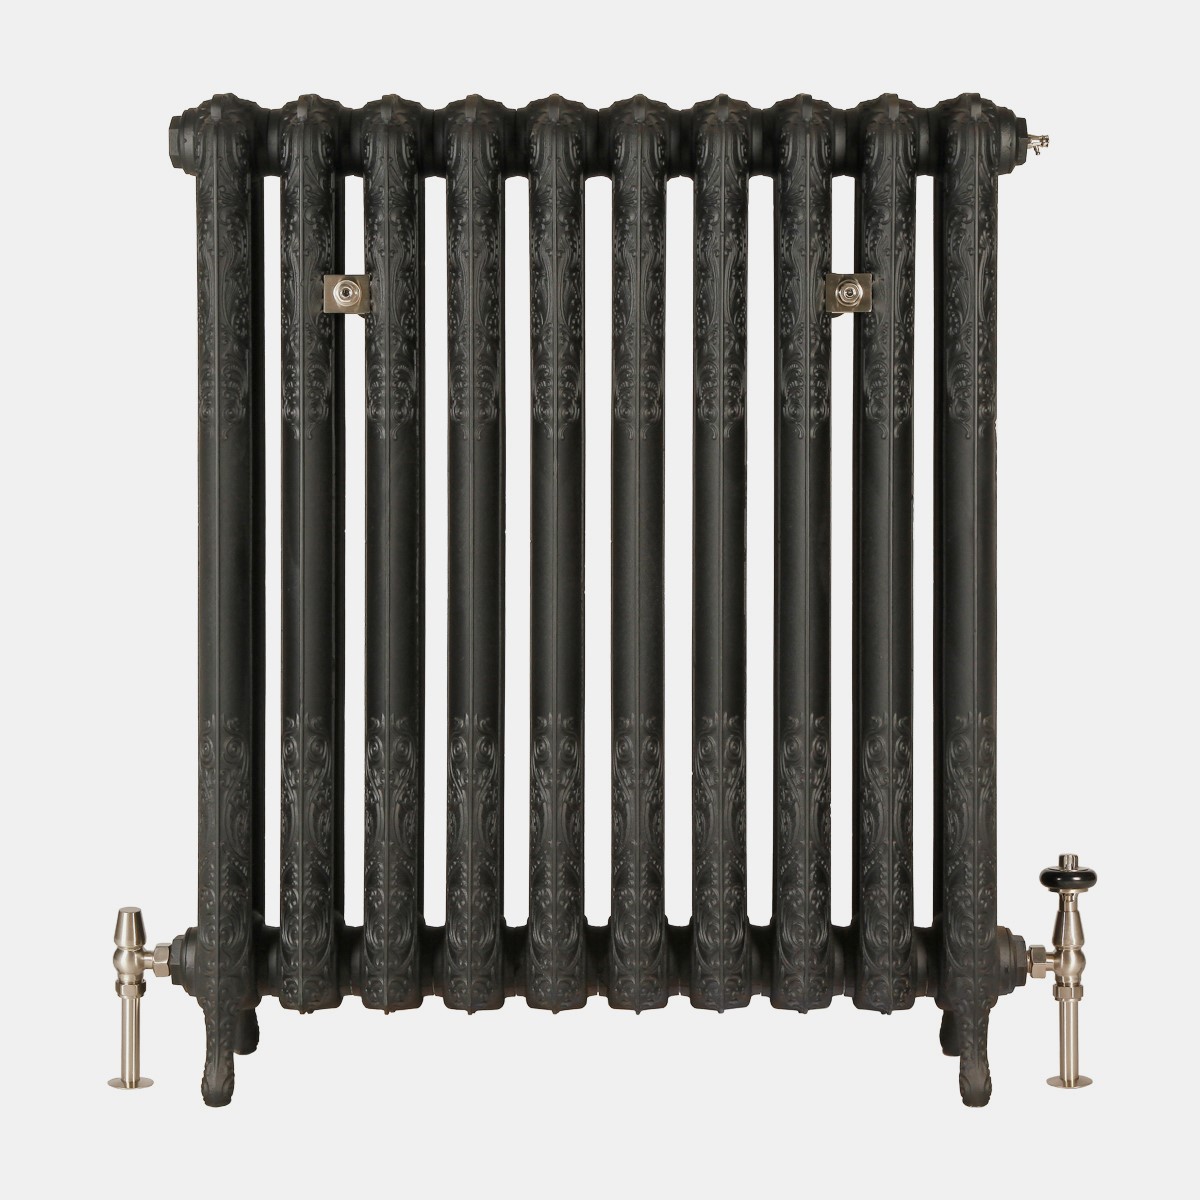 Rococo II 950mm cast iron radiator in Matt Black finish